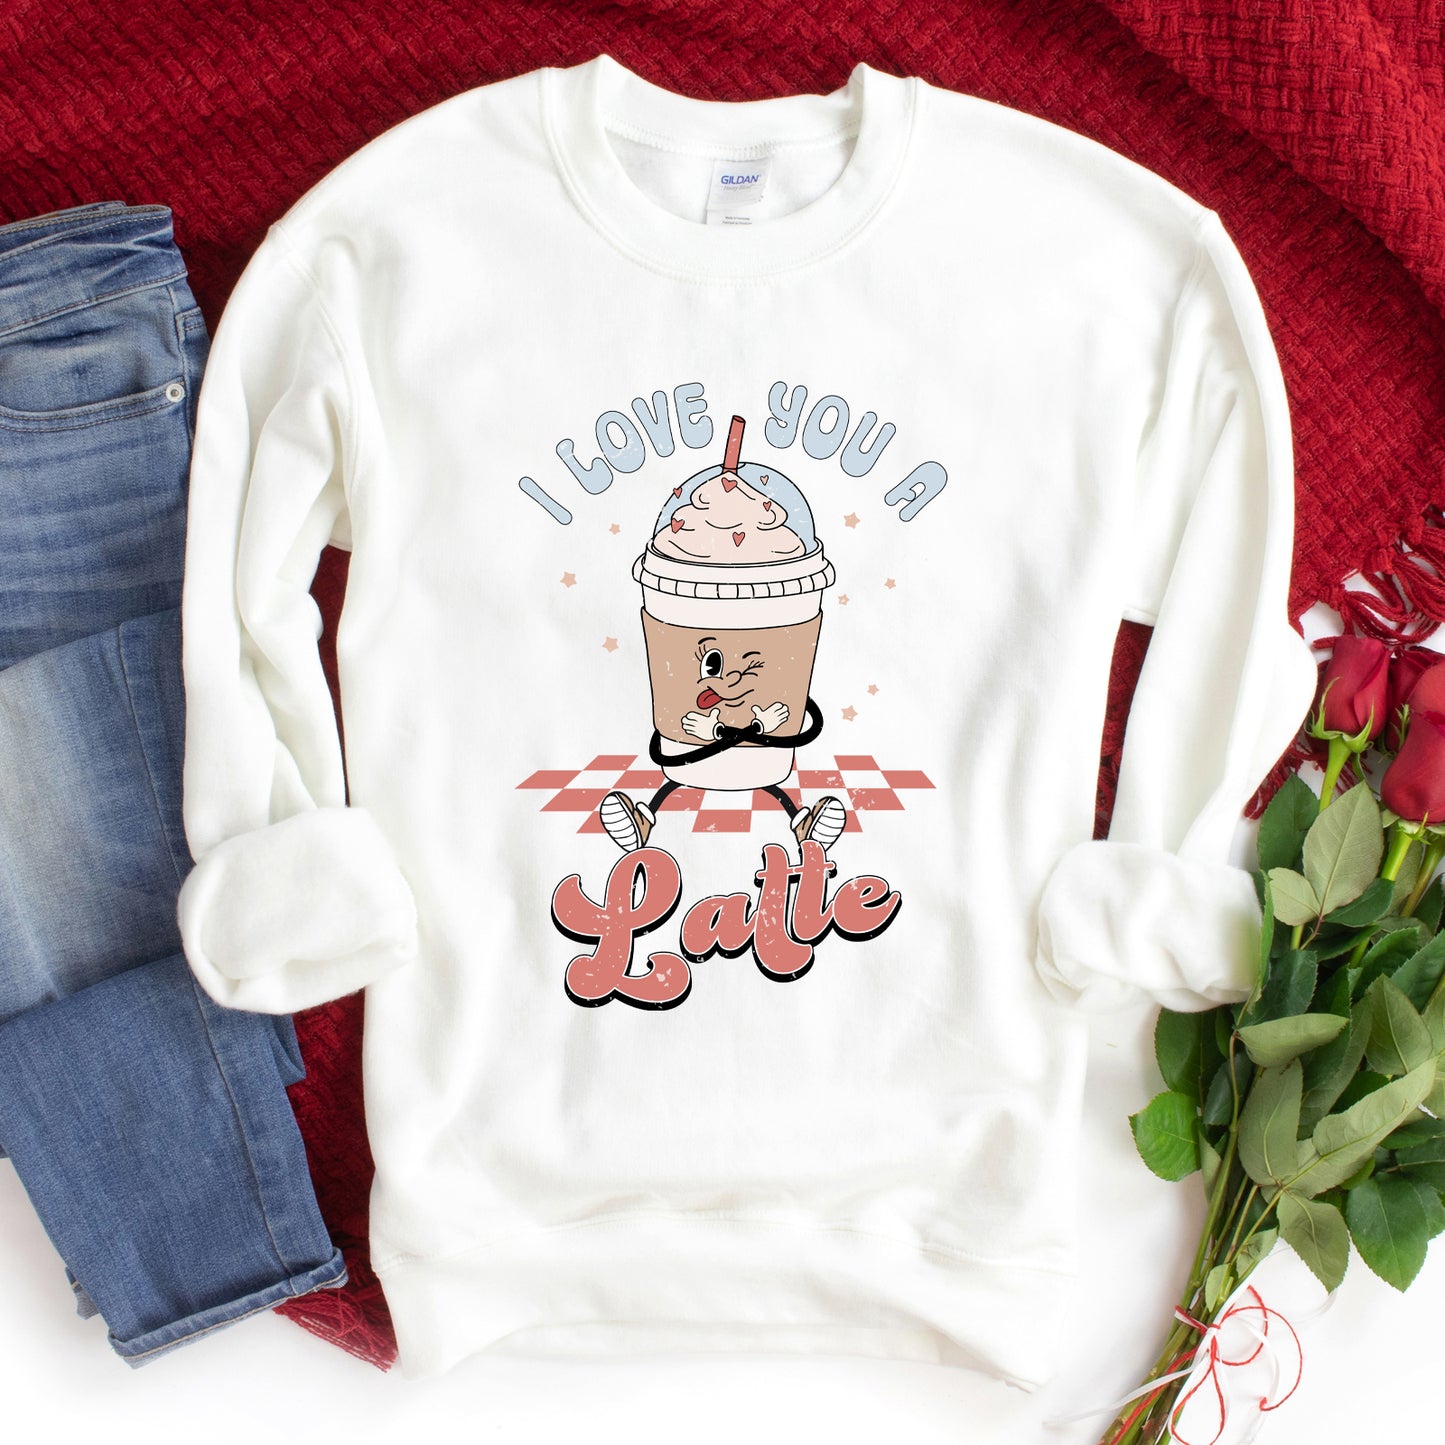 I Love You A Latte | Sweatshirt